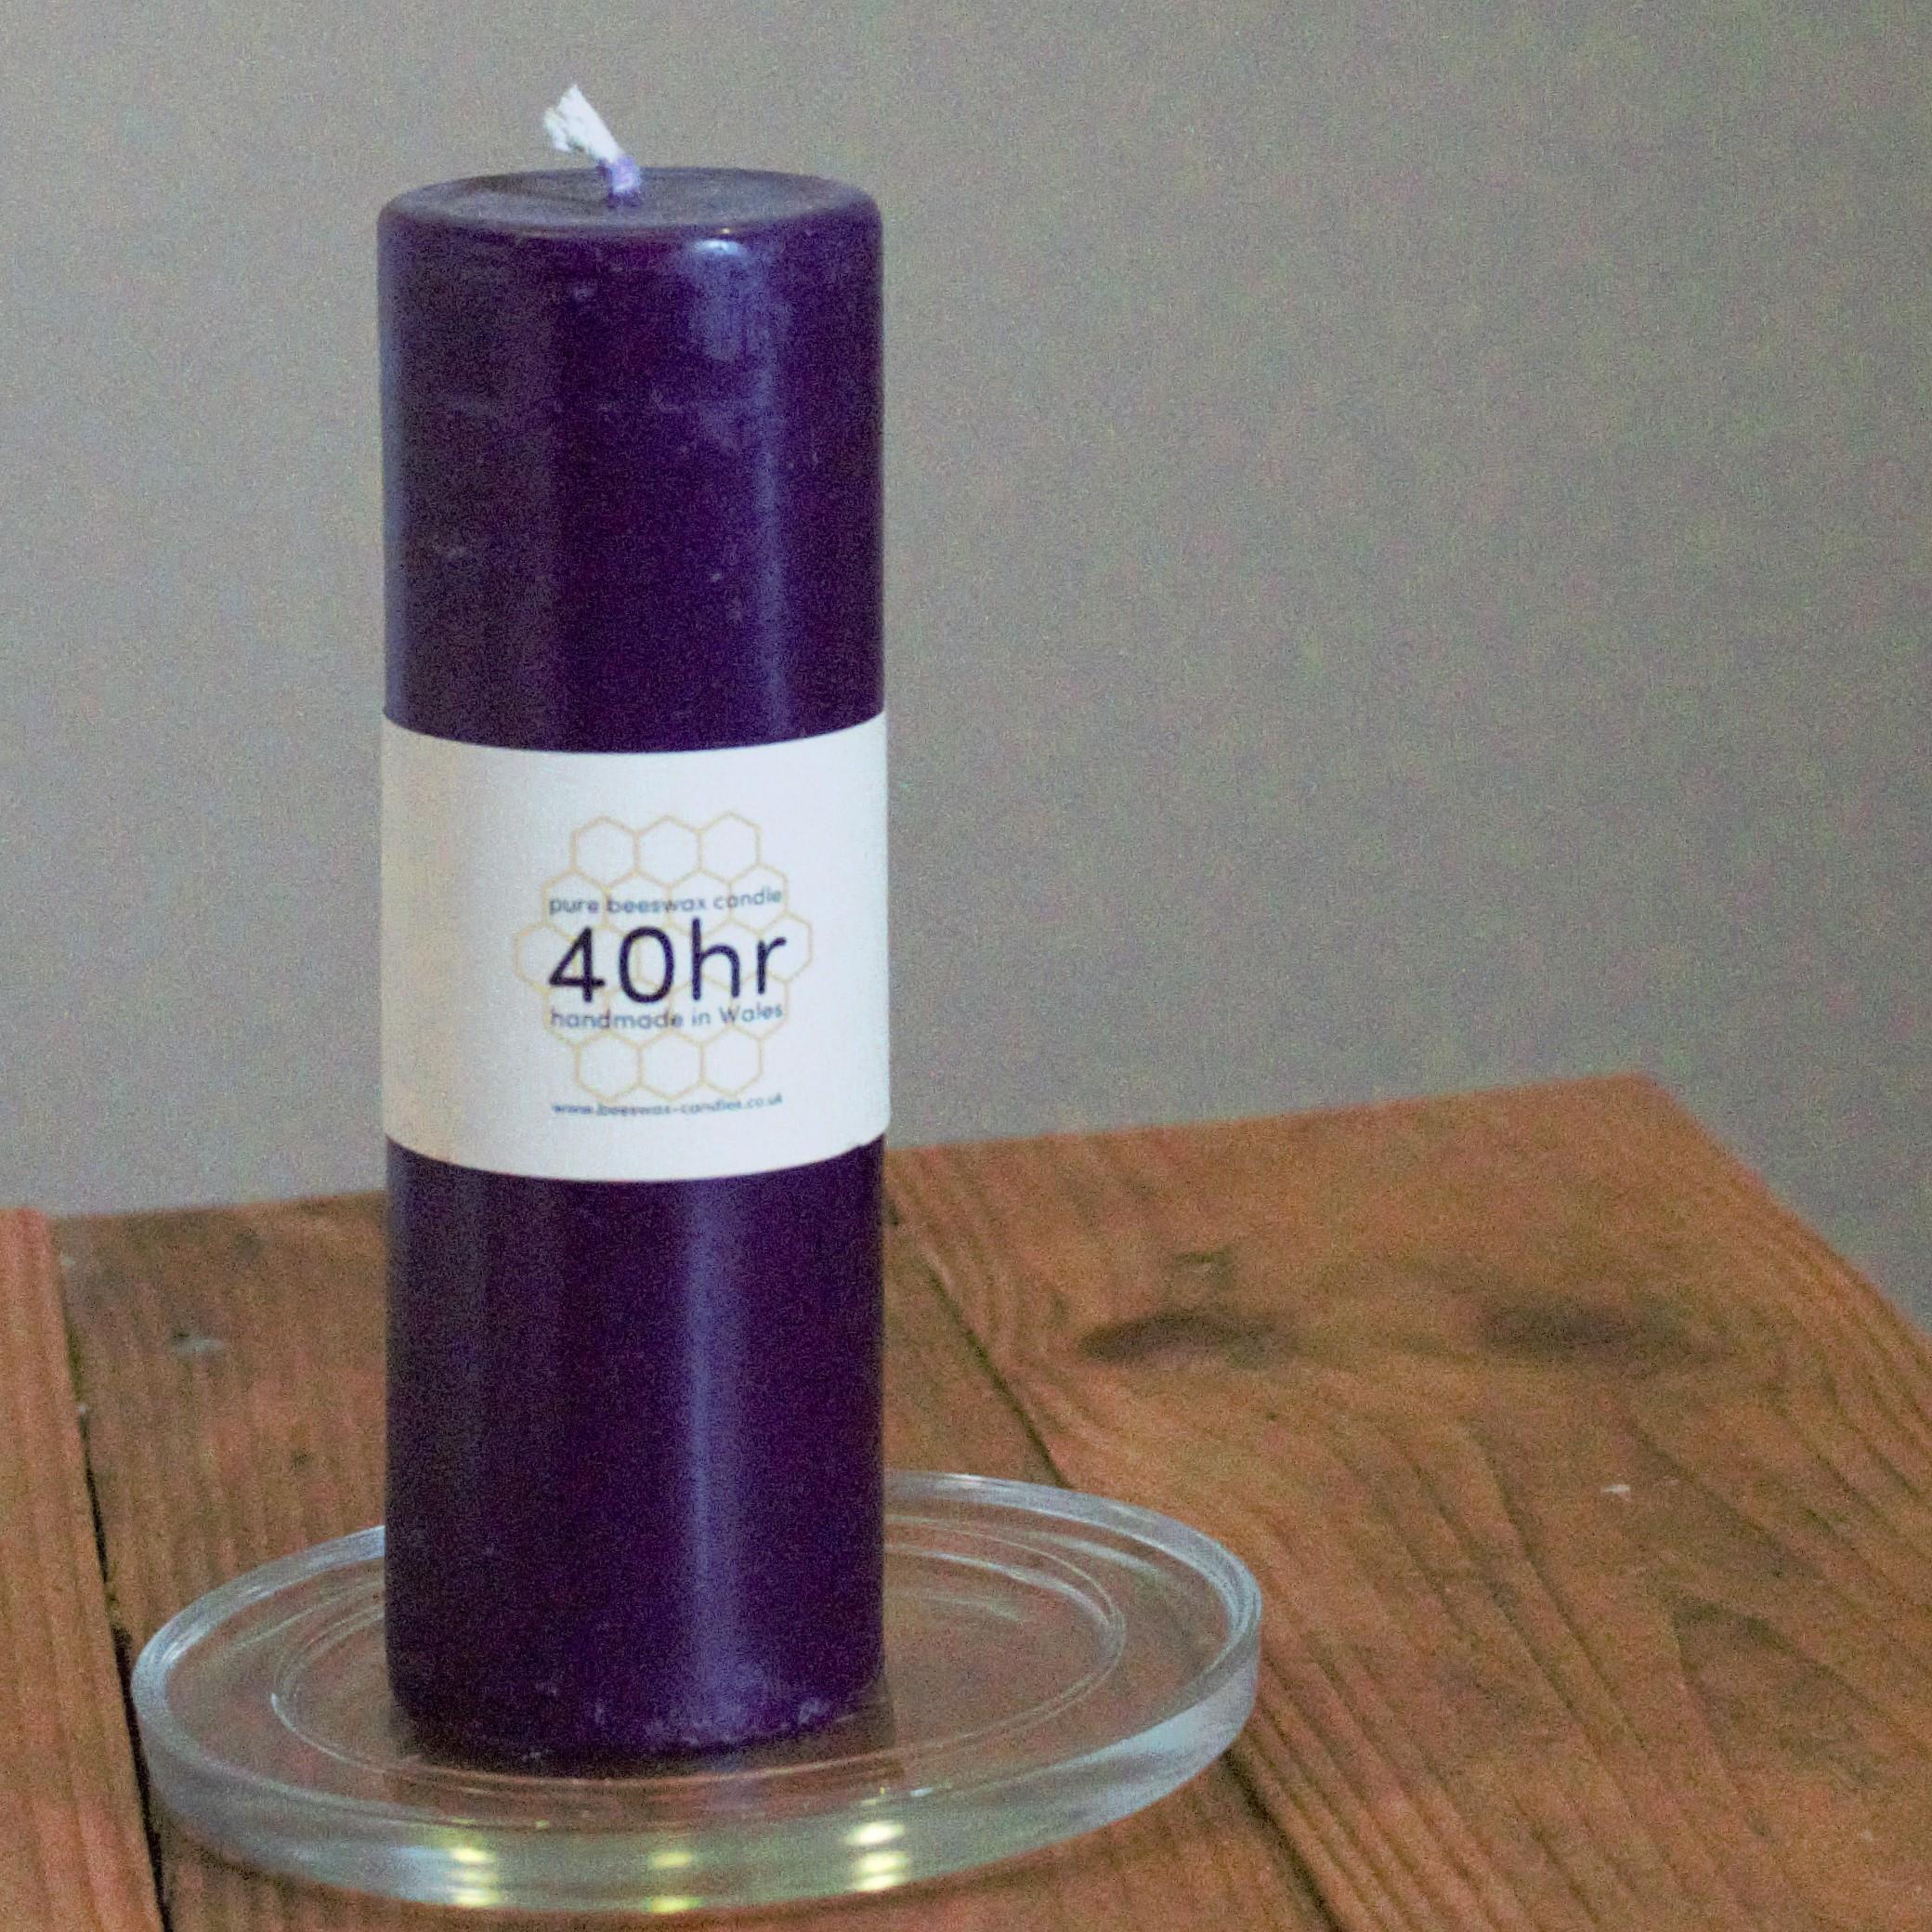 Deep Purple 40hr beeswax pillar candle